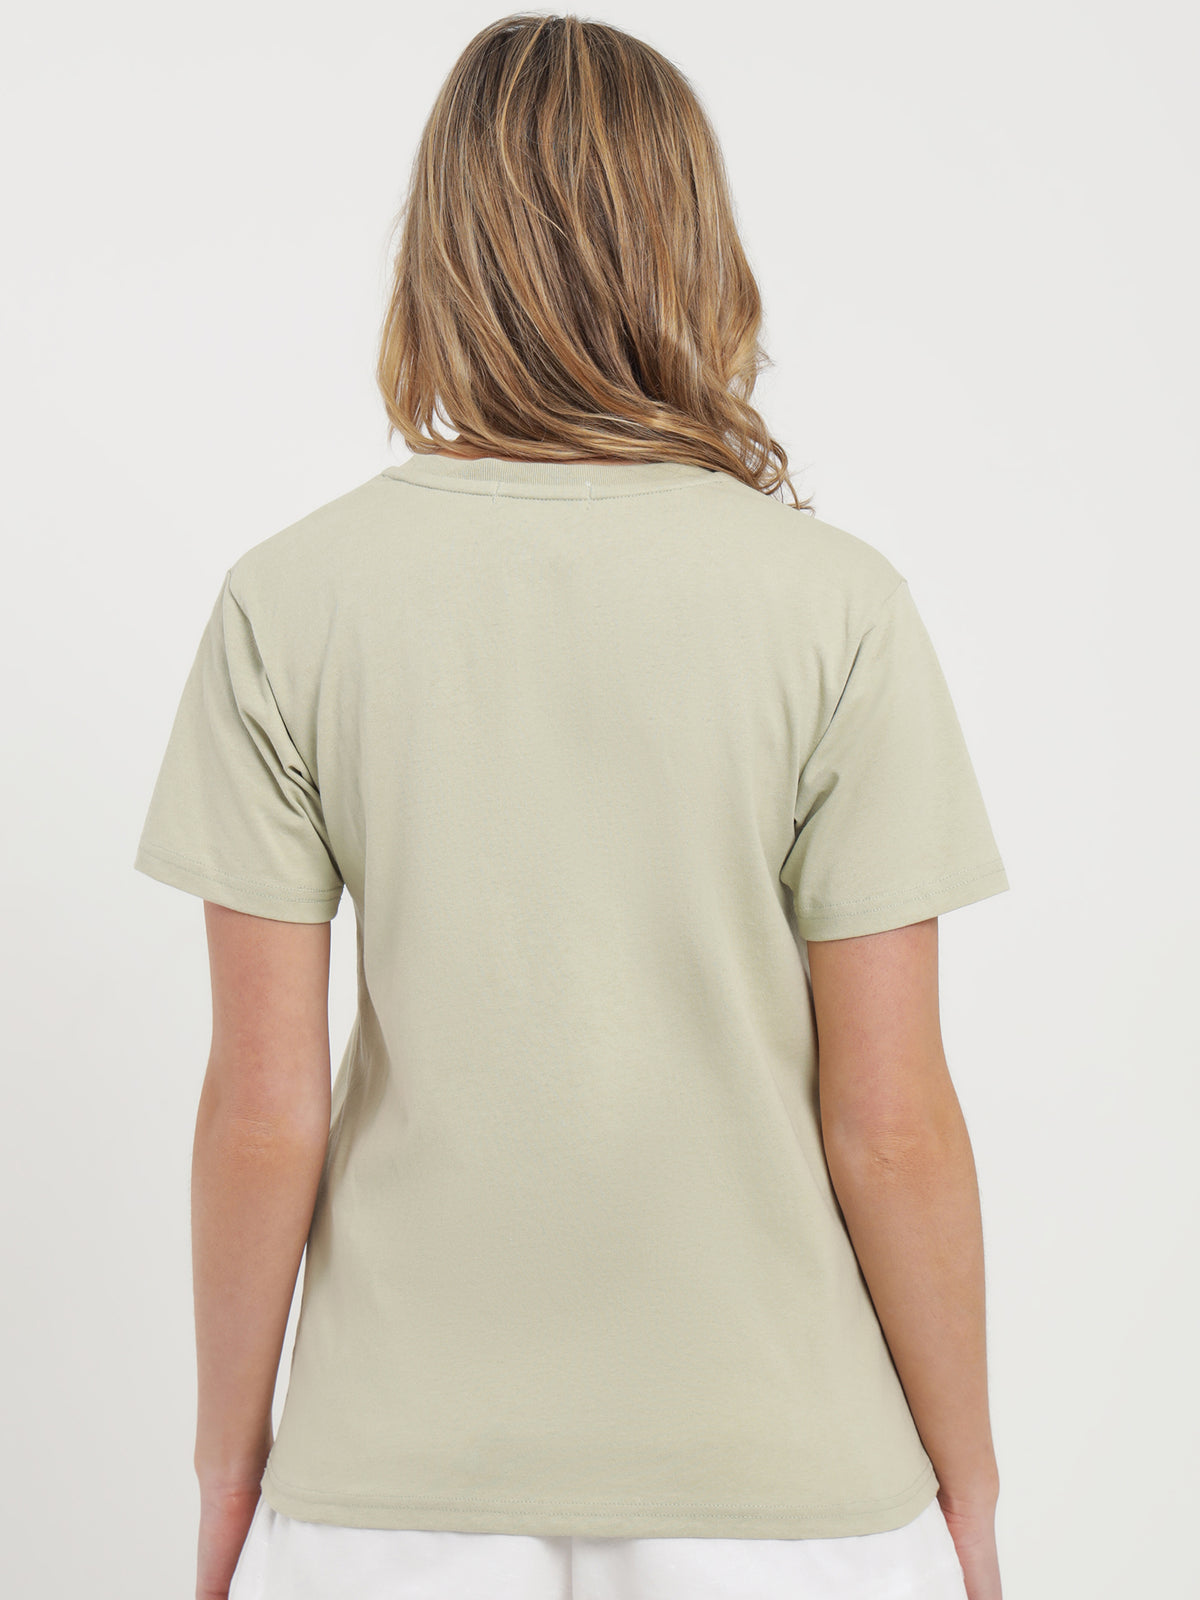 Nude Organic Hemp T-Shirt in Eucalyptus